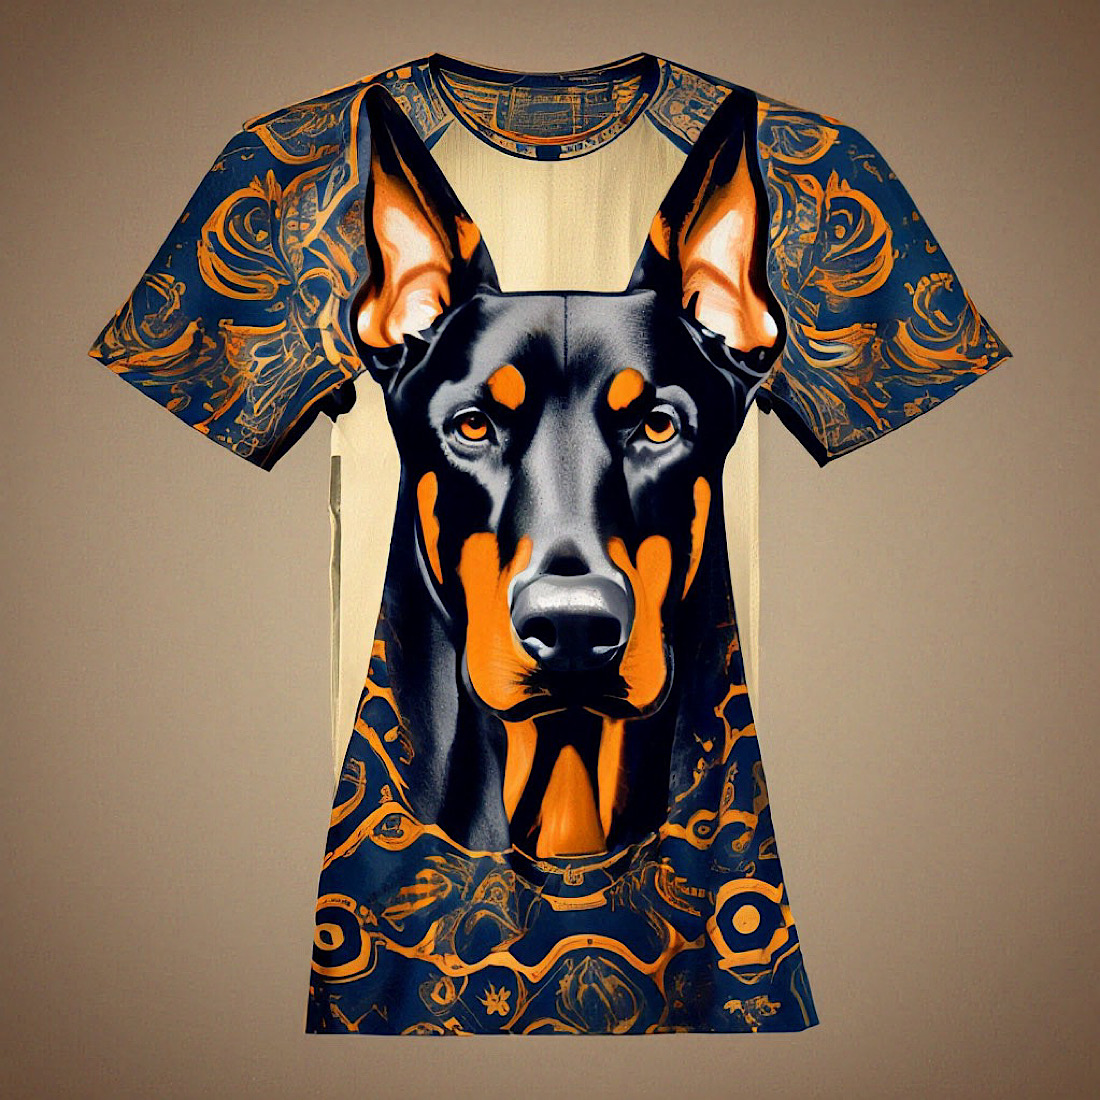 Men's Unisex T-shirt, abstract pattern, Black and orange design, Doberman pattern preview image.